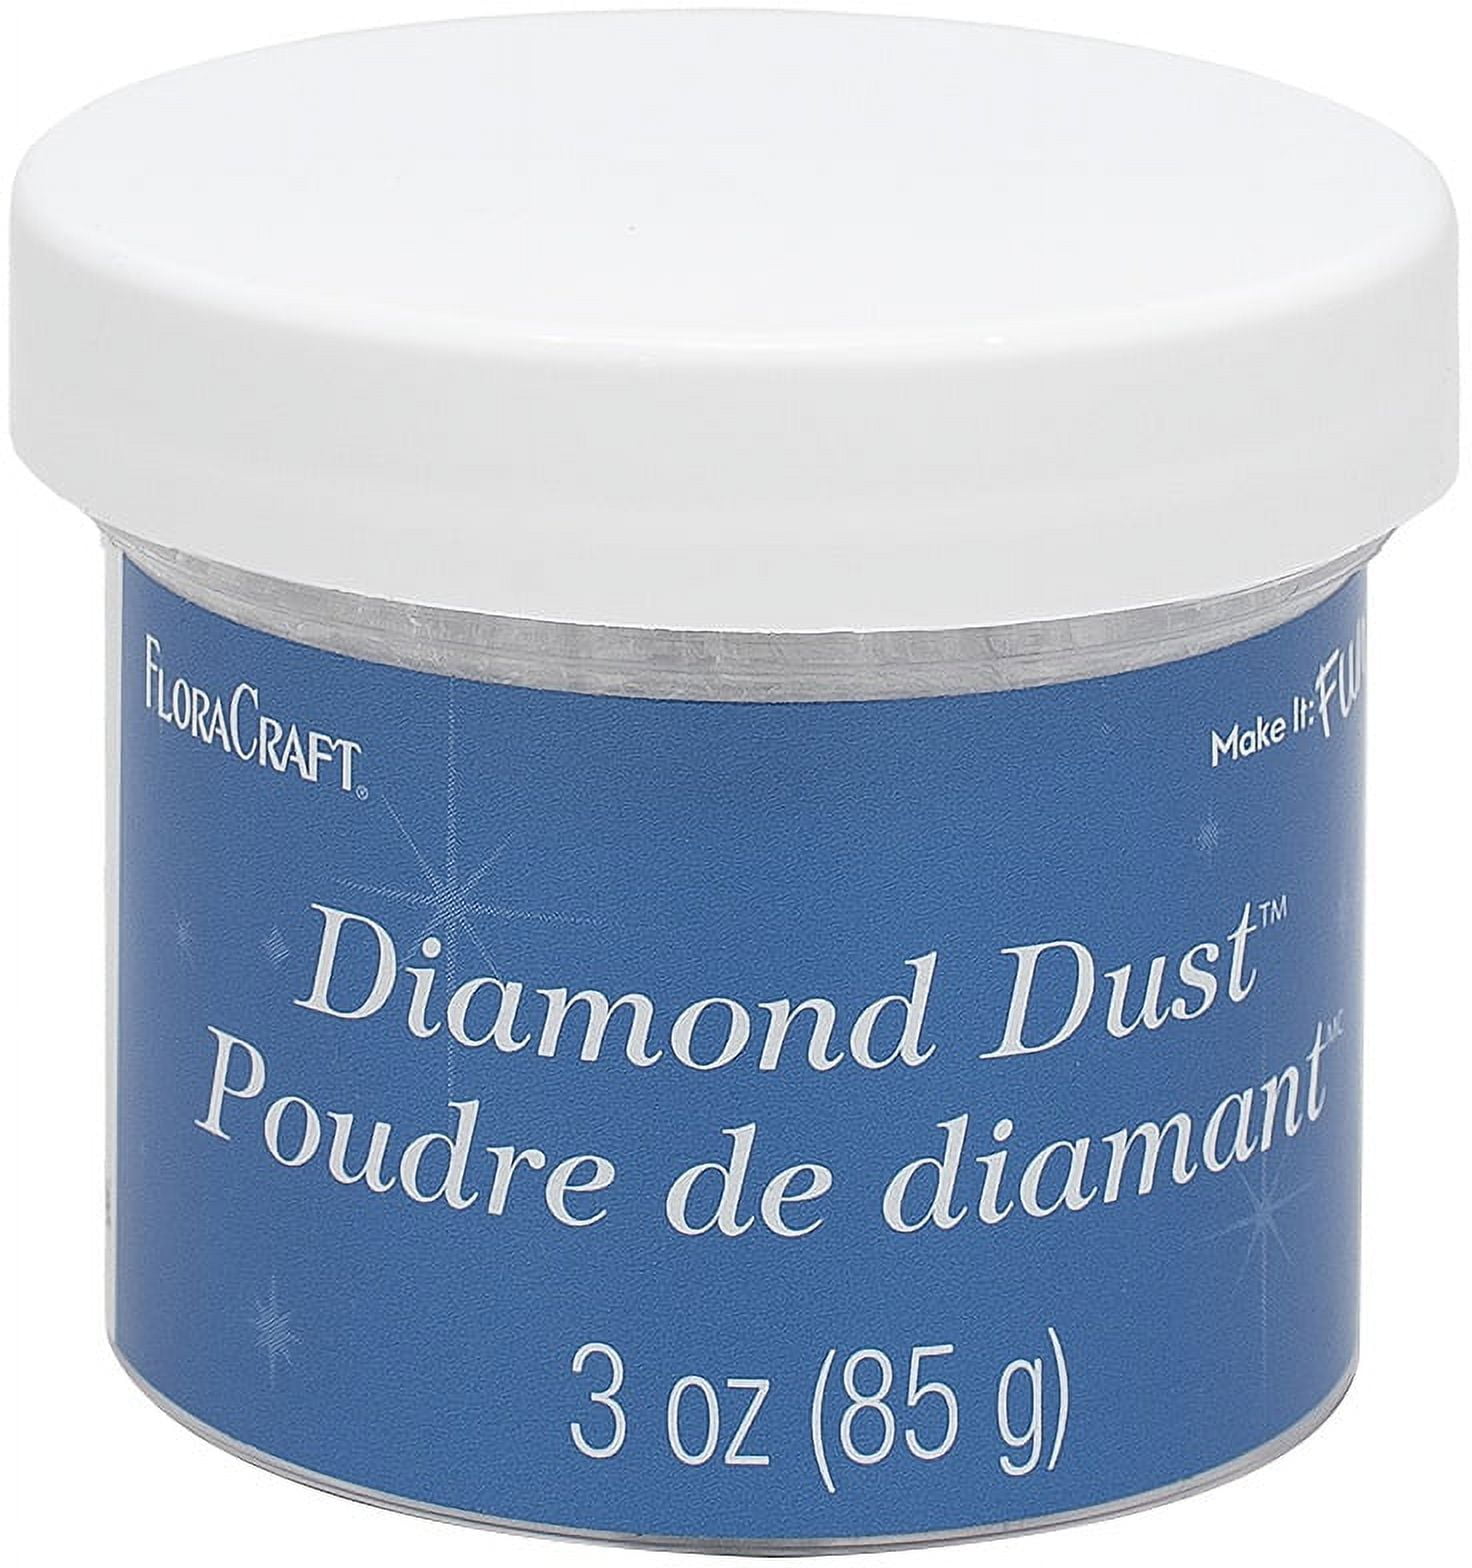 Eyes and Rhinestones: Diamond Dust™